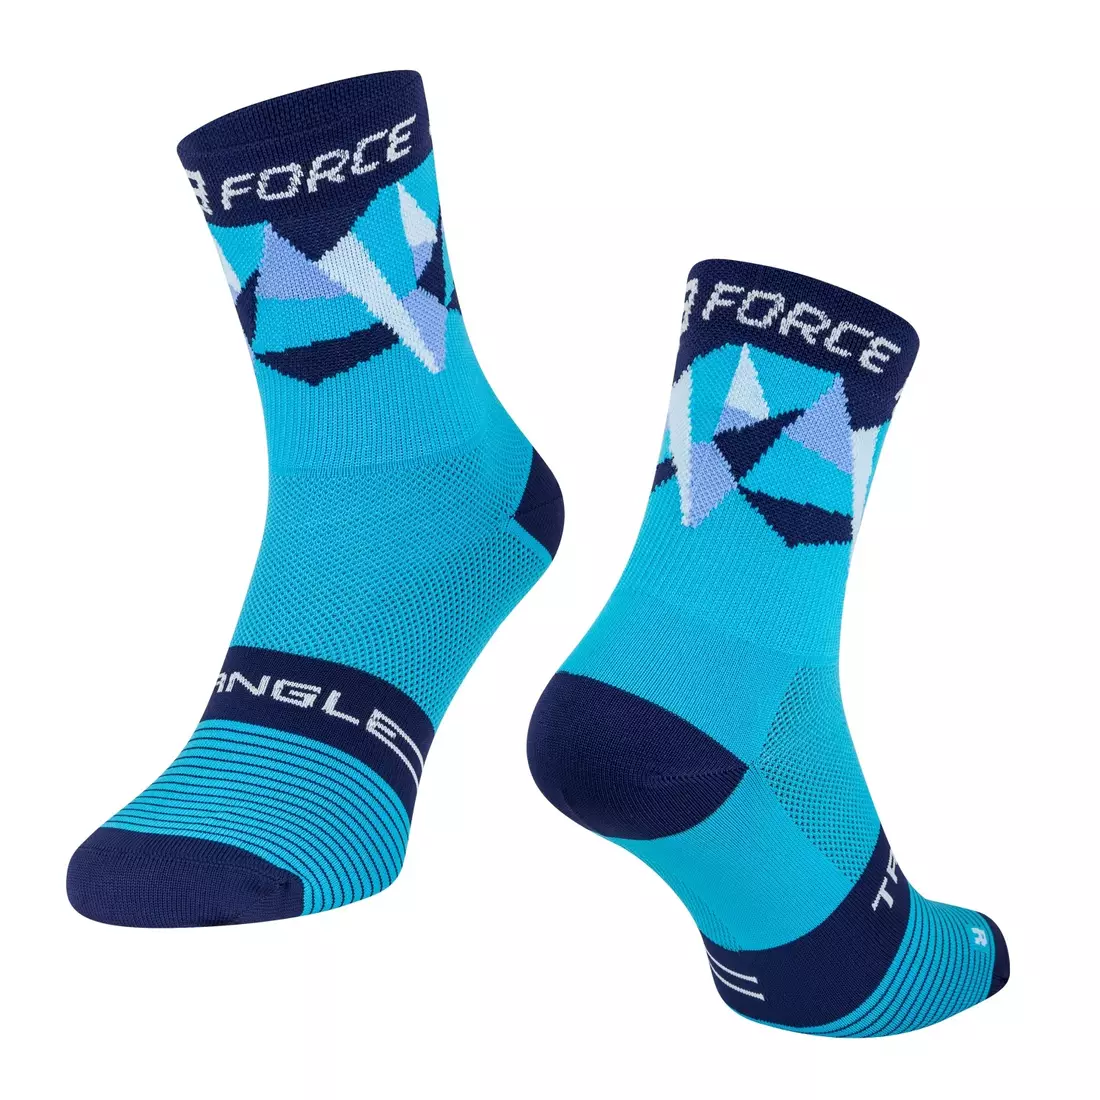 FORCE TRIANGLE cycling/sports socks, blue